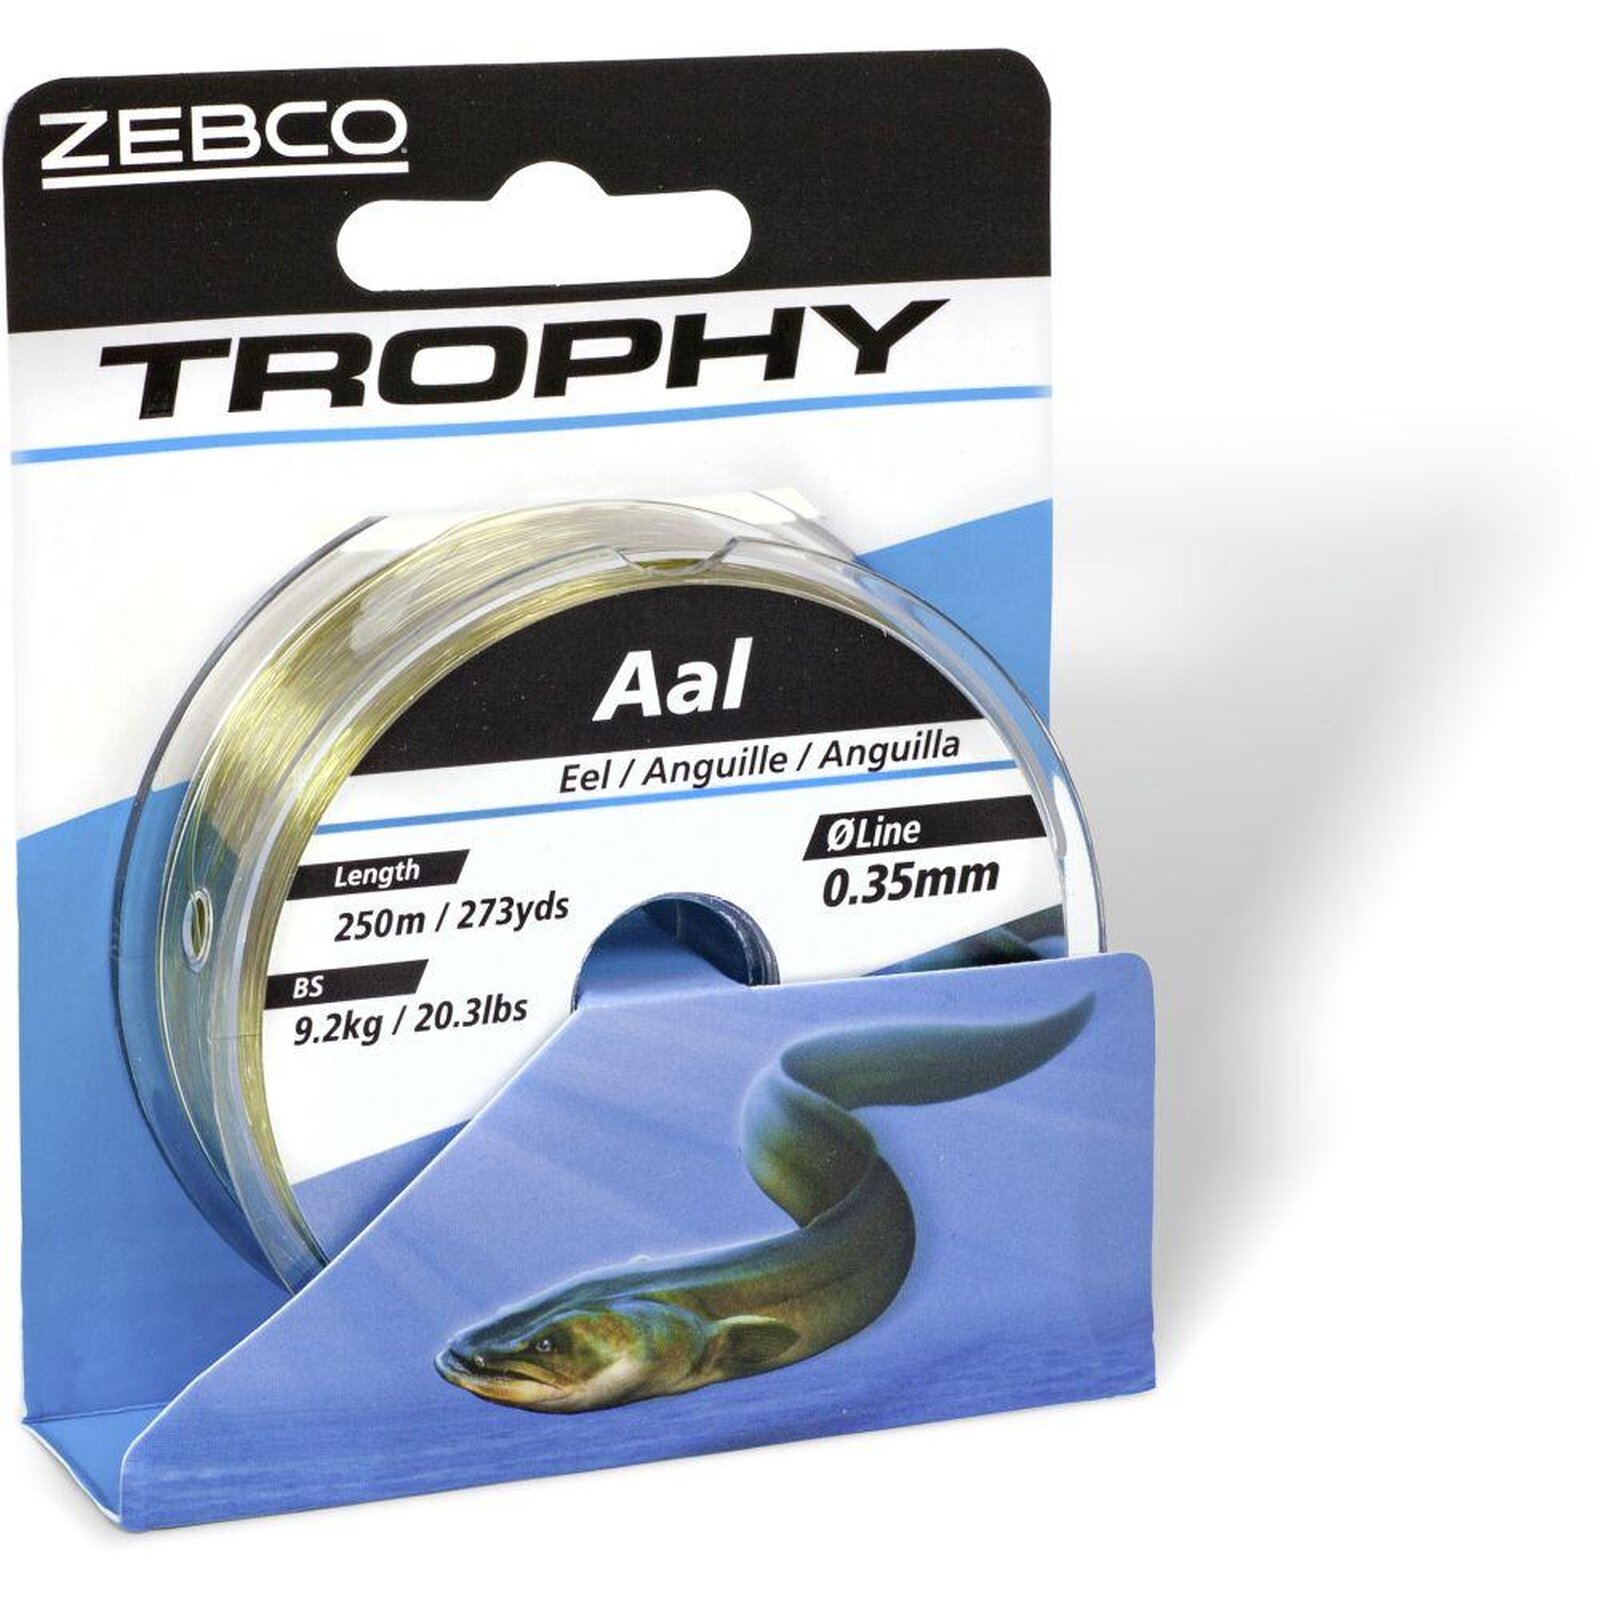 Zebco Trophy Aal 300m camo-hell 0,35mm 9,2kg